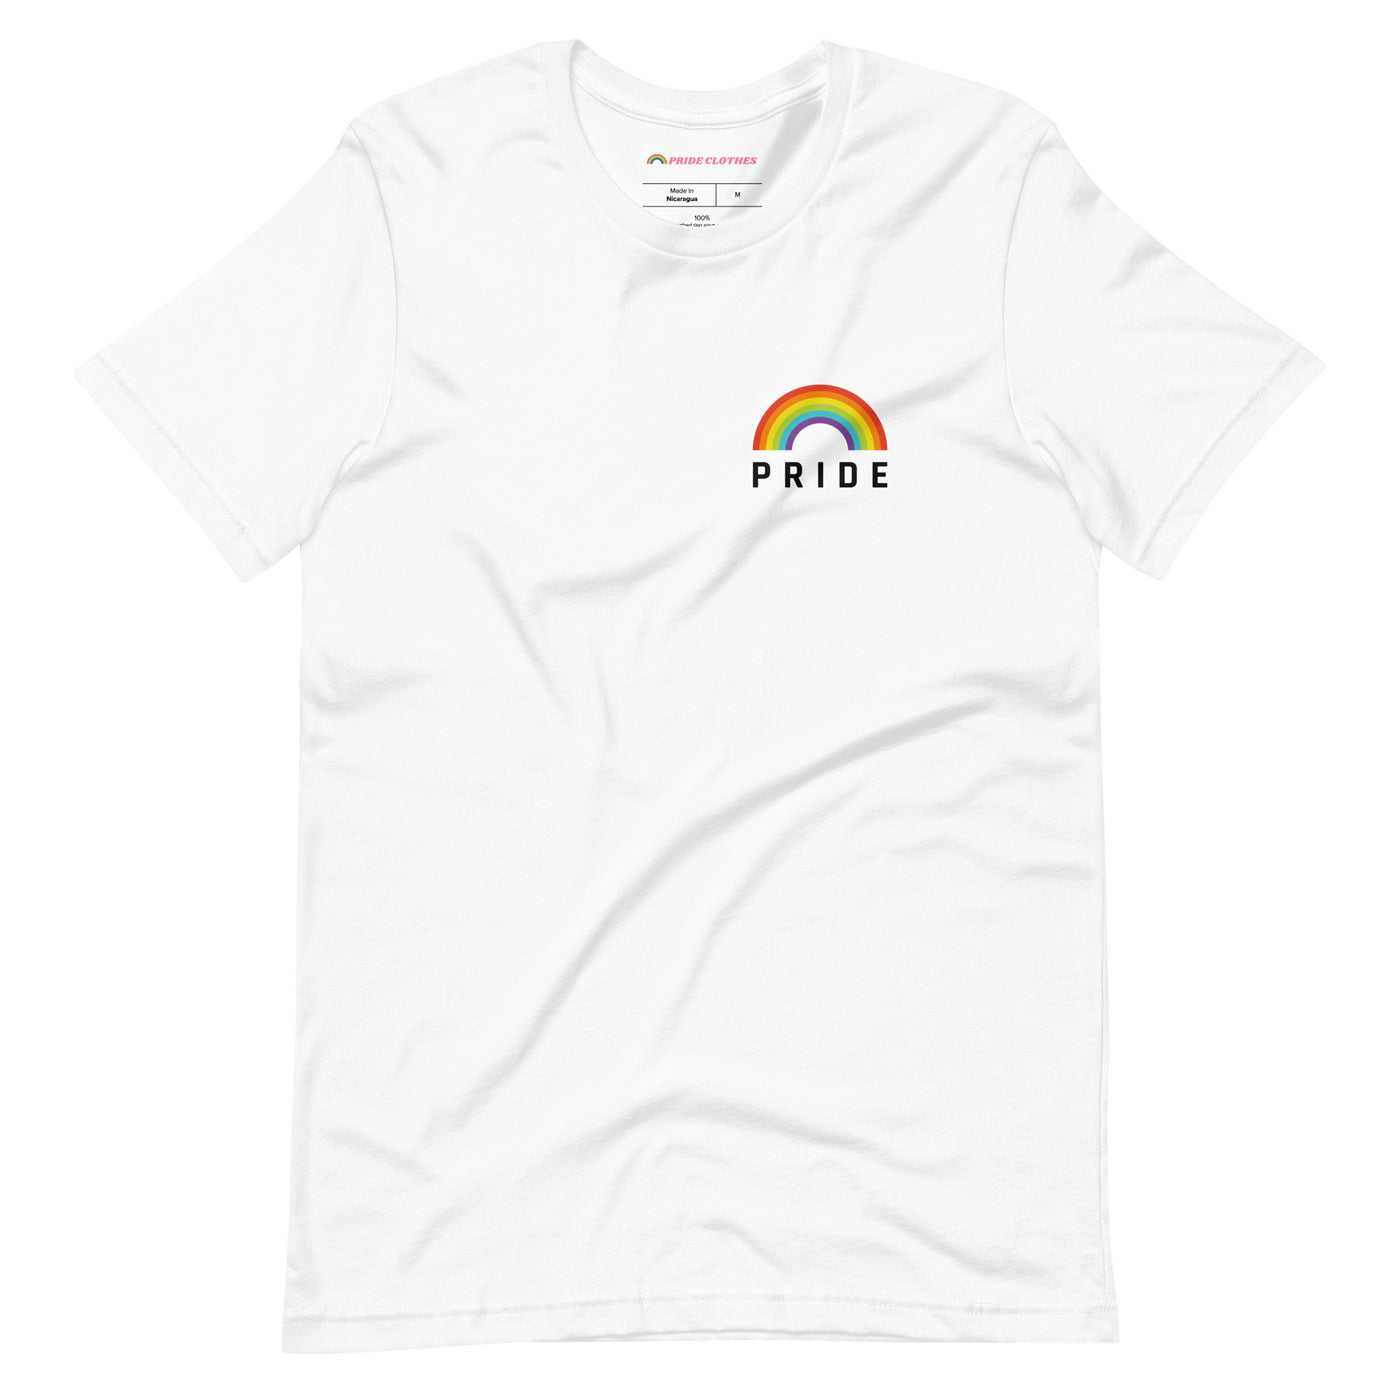 Pride Clothes - Got Pride? Astounding Rainbow Pride Clothes T-Shirt - White